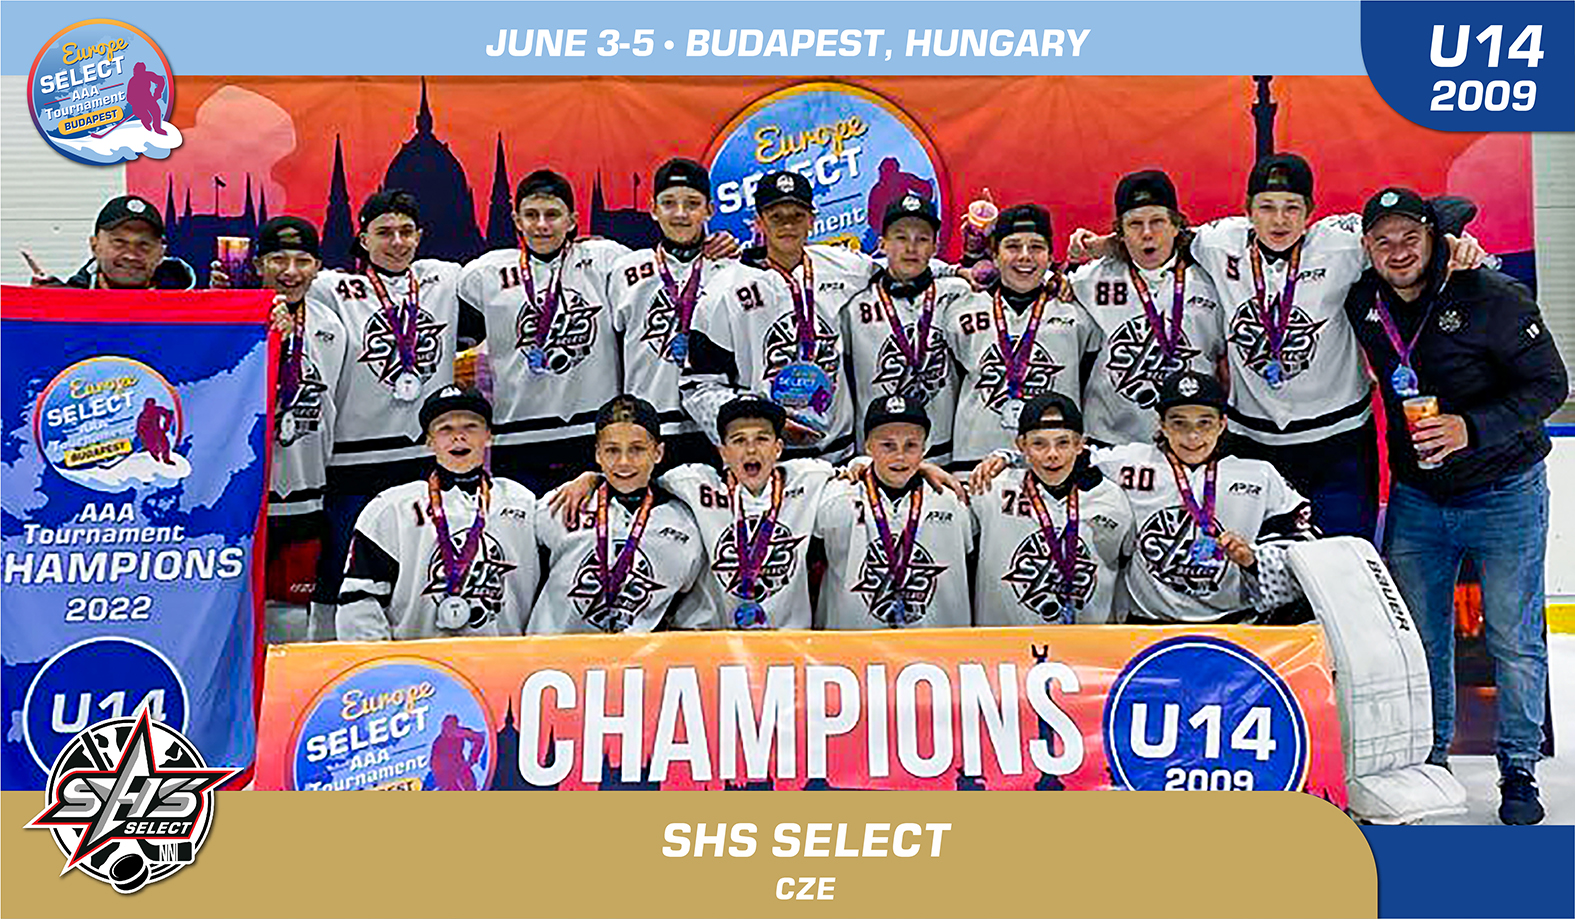 Czech SHS Select wins the U14 Europe Select Tournament 2022!